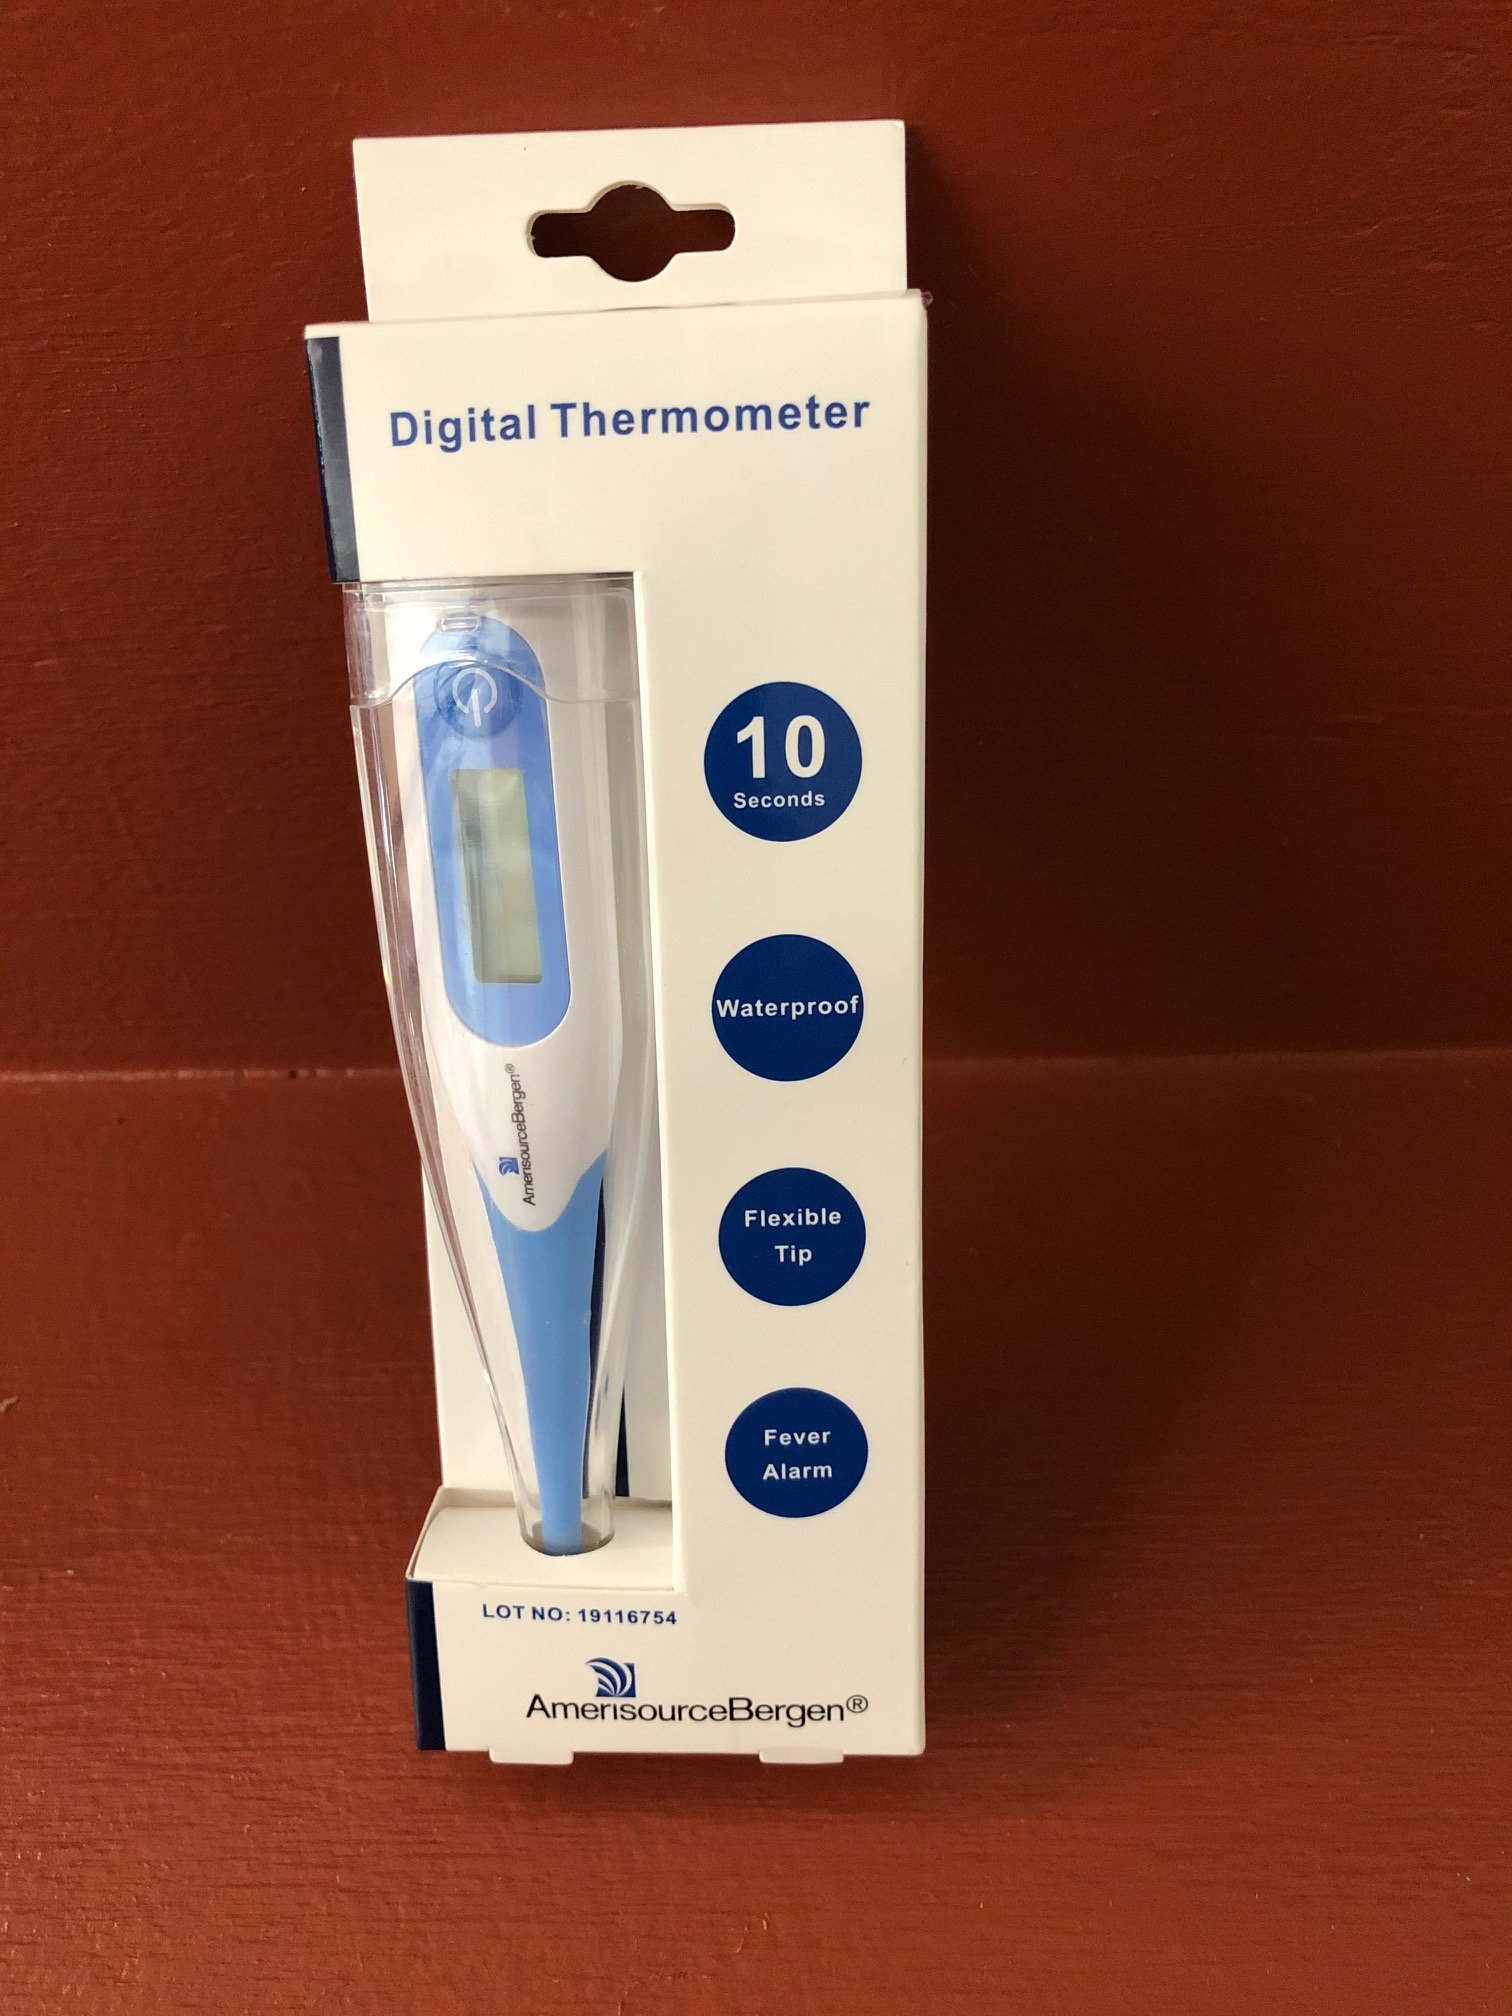 Digital Thermometer 10 seconds waterproof Fever Alarm Rigid Tip